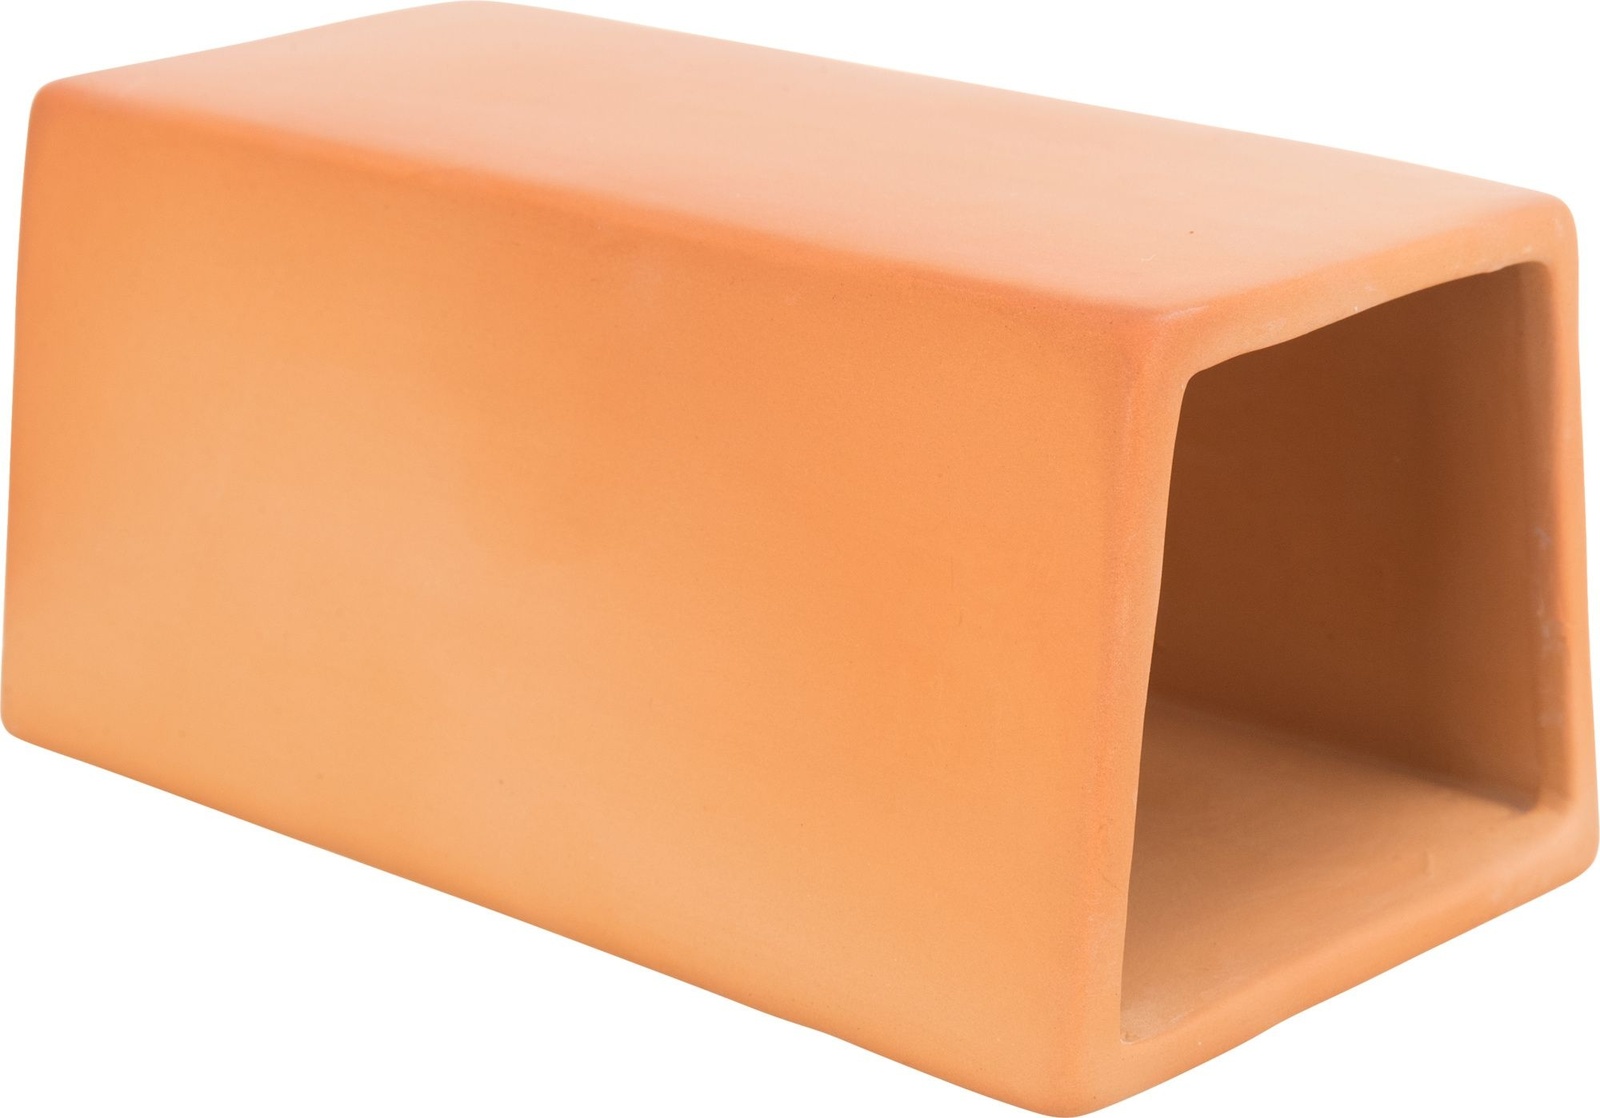 Trixie туннель для мышей из керамики, терракотовый (20 х 9 х 10 см) Trixie туннель для мышей из керамики, терракотовый (20 х 9 х 10 см) - фото 1